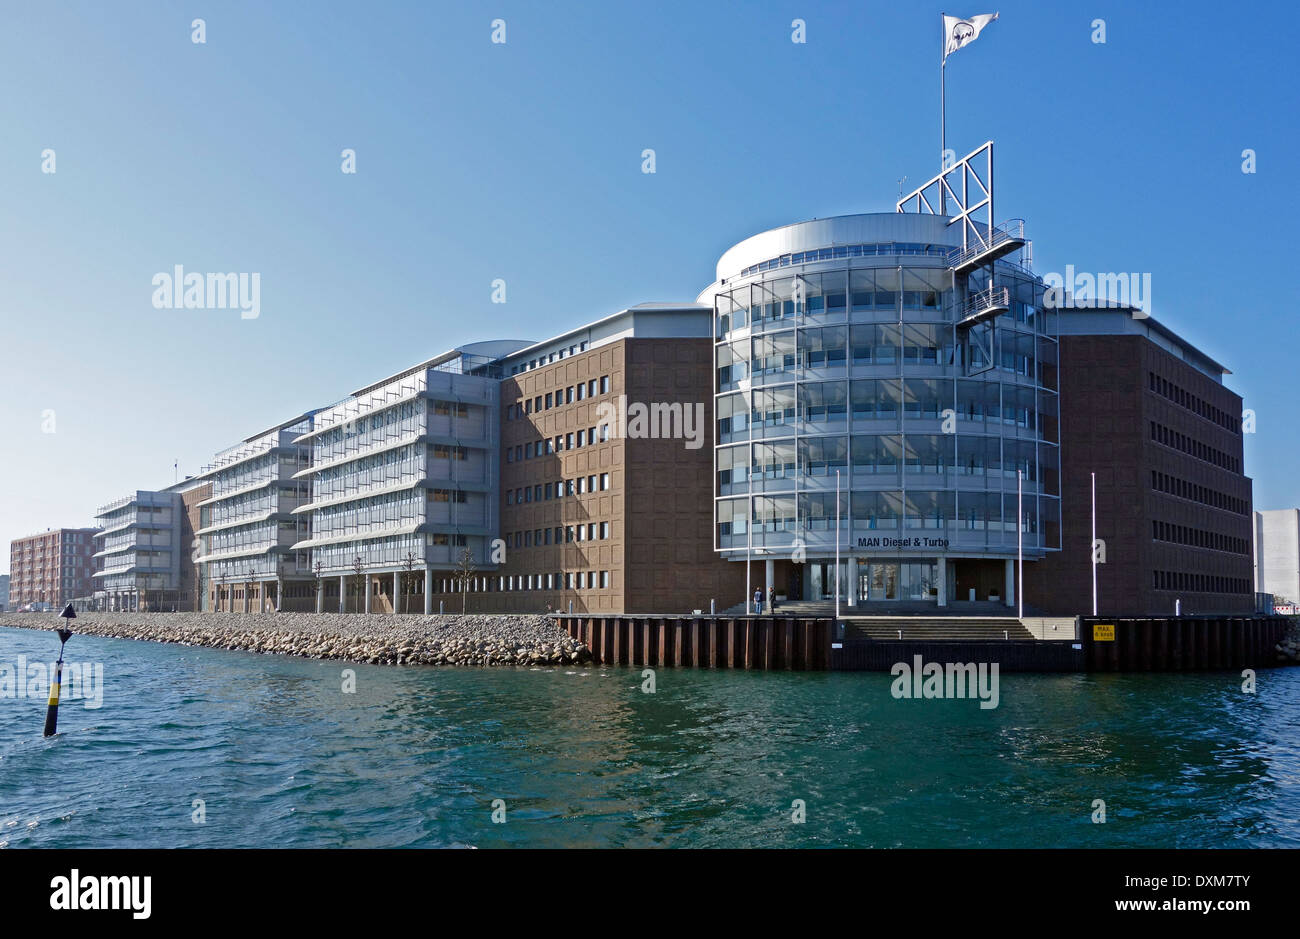 Man Diesel & Turbo building in Sydhavnen Denmark Stock Photo - Alamy